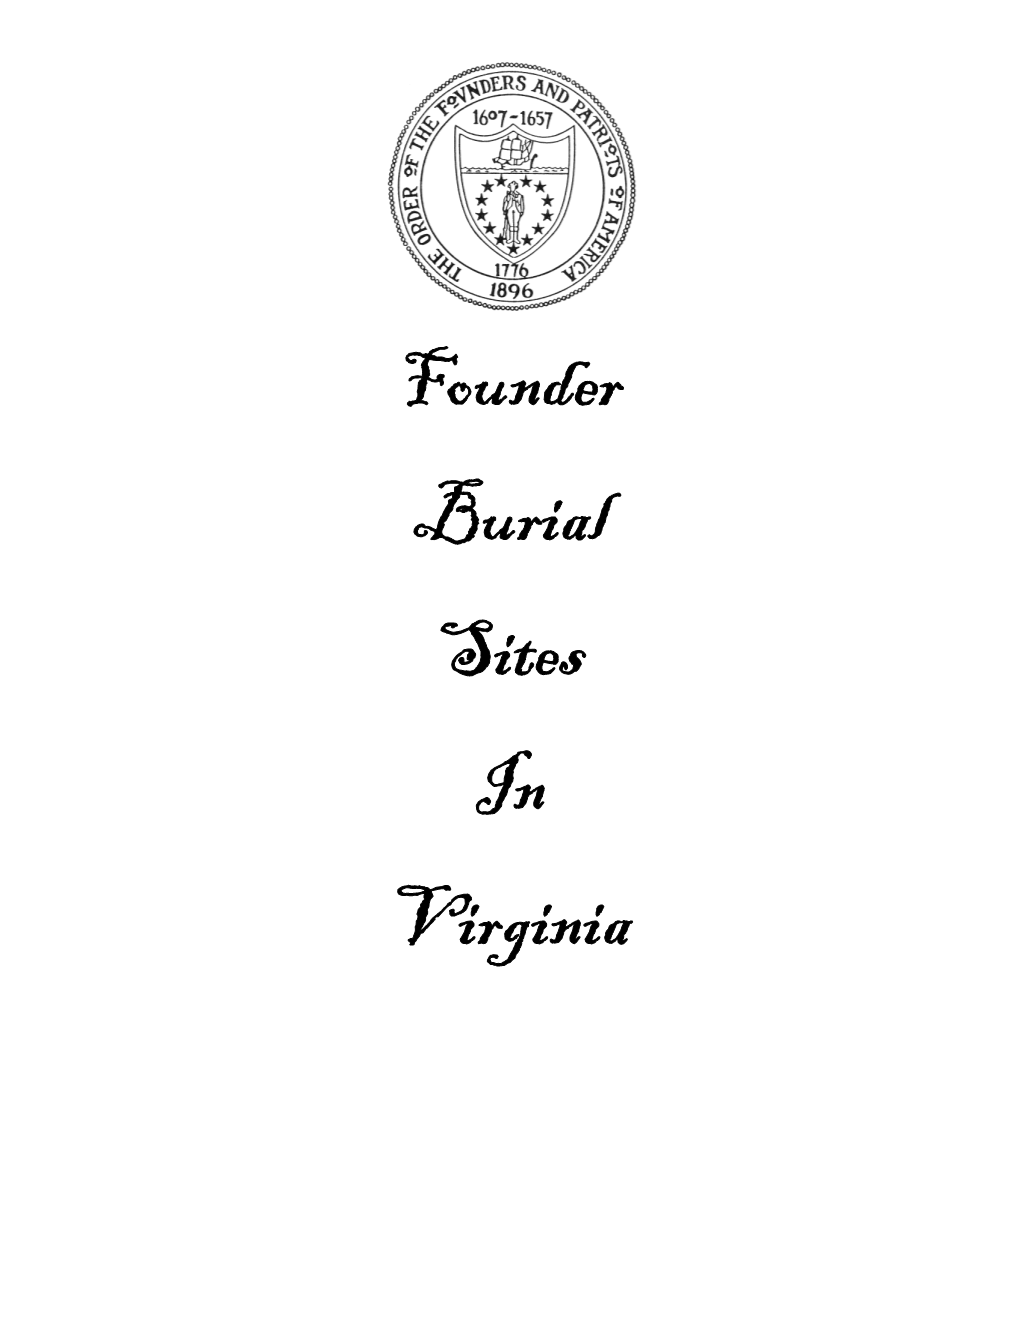 Founder Burial Sites in Virginia